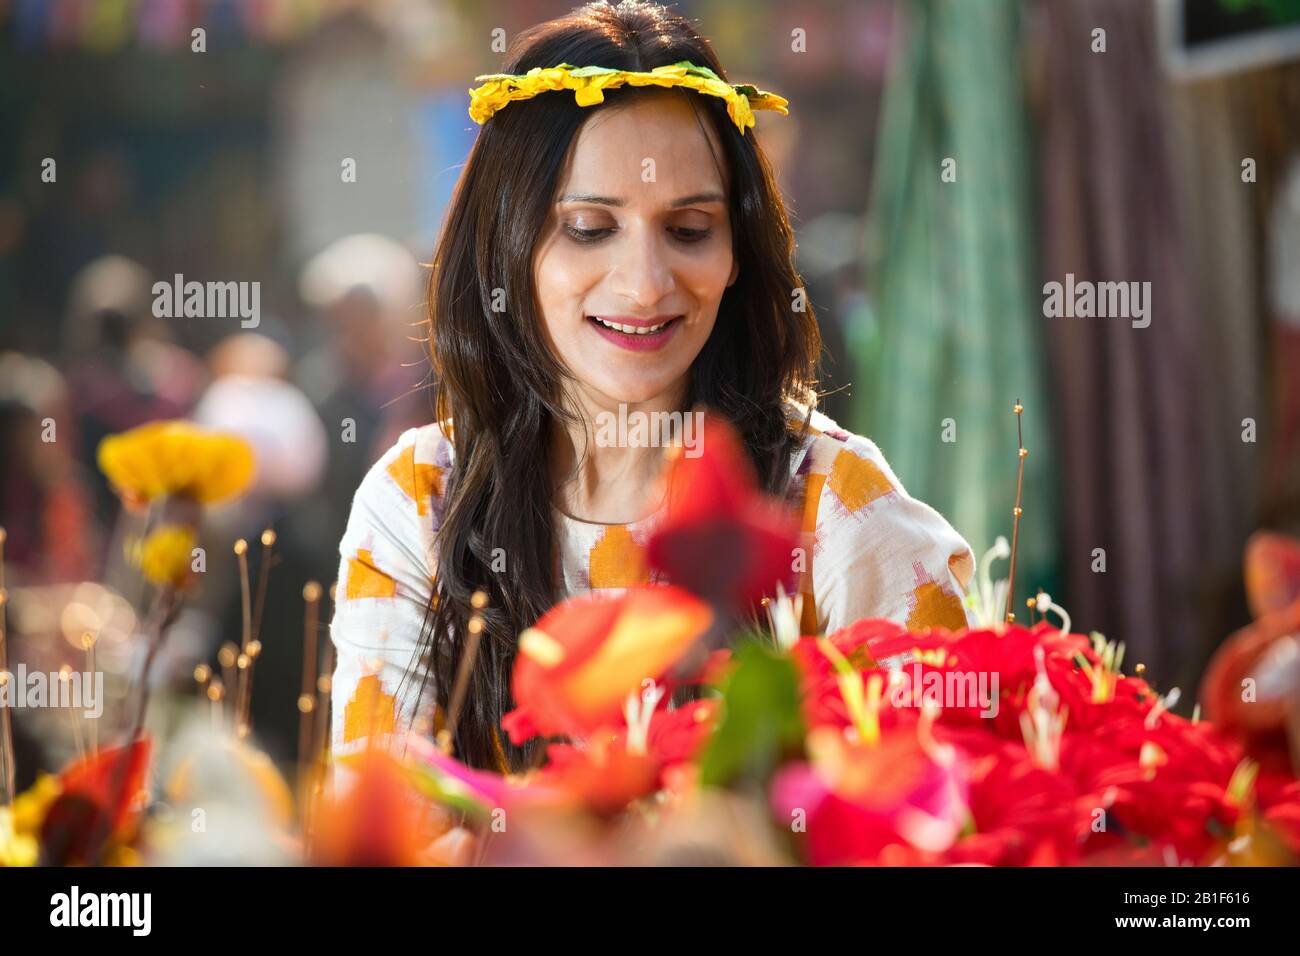 Women trying on floral tiara at street market Stock Photo